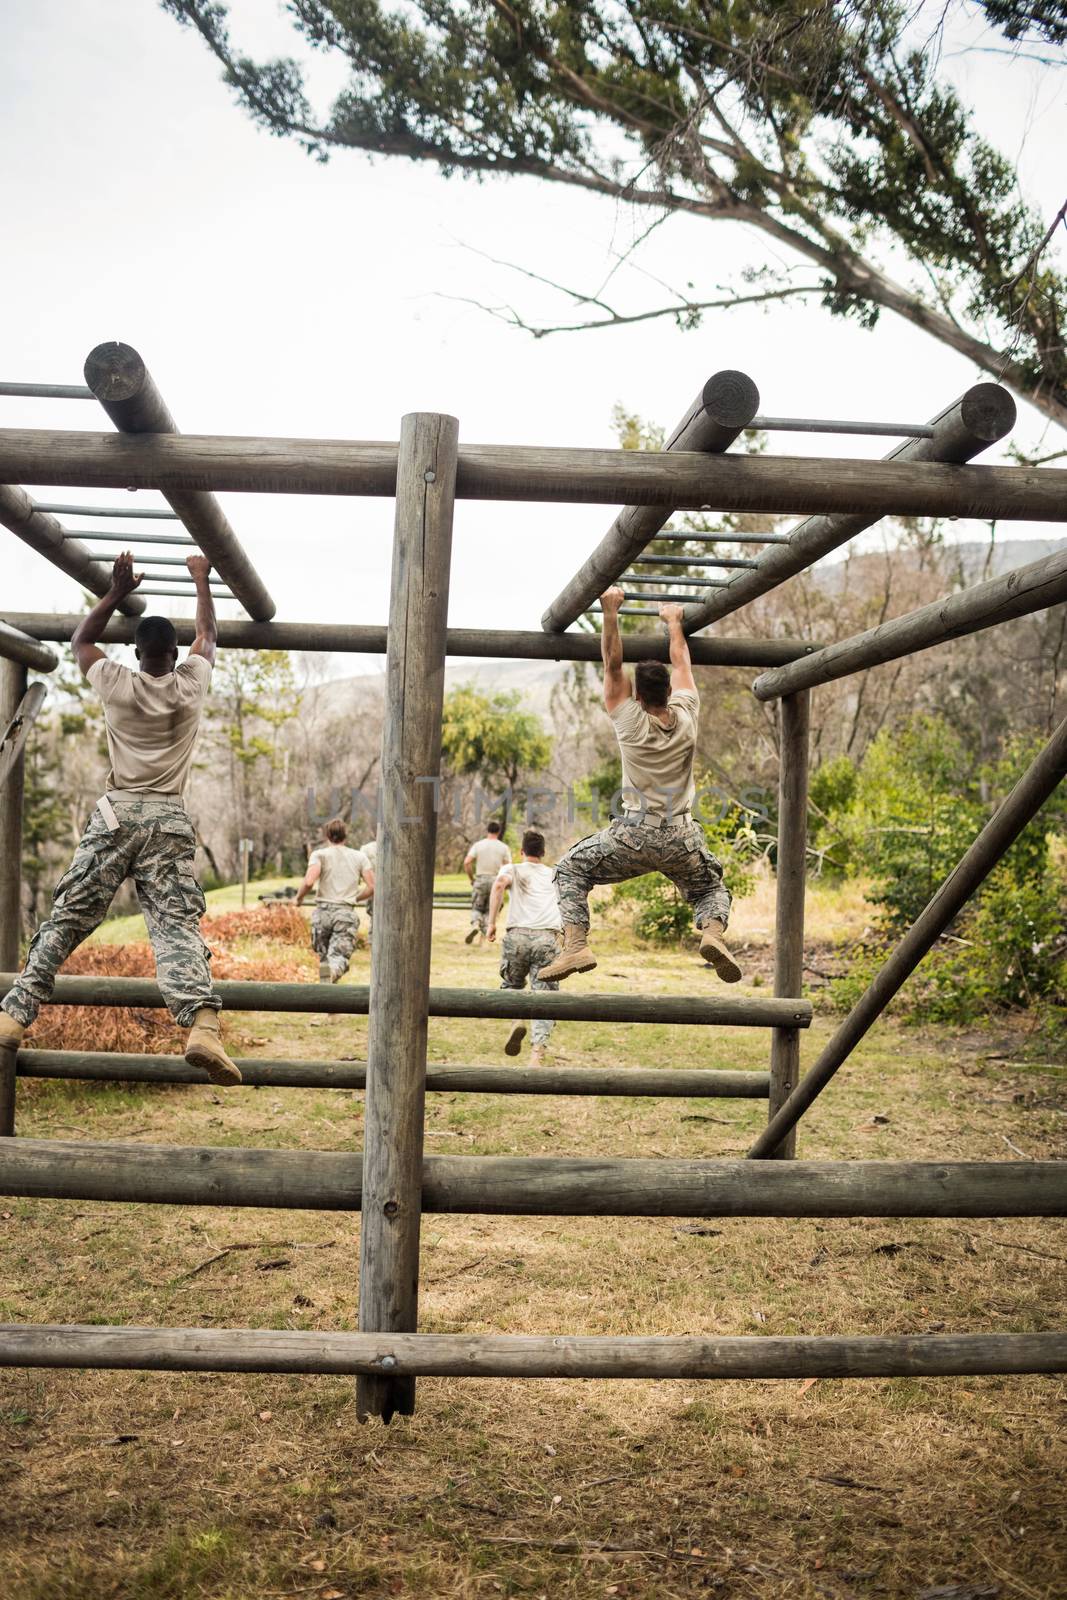 Soldiers climbing monkey bars by Wavebreakmedia